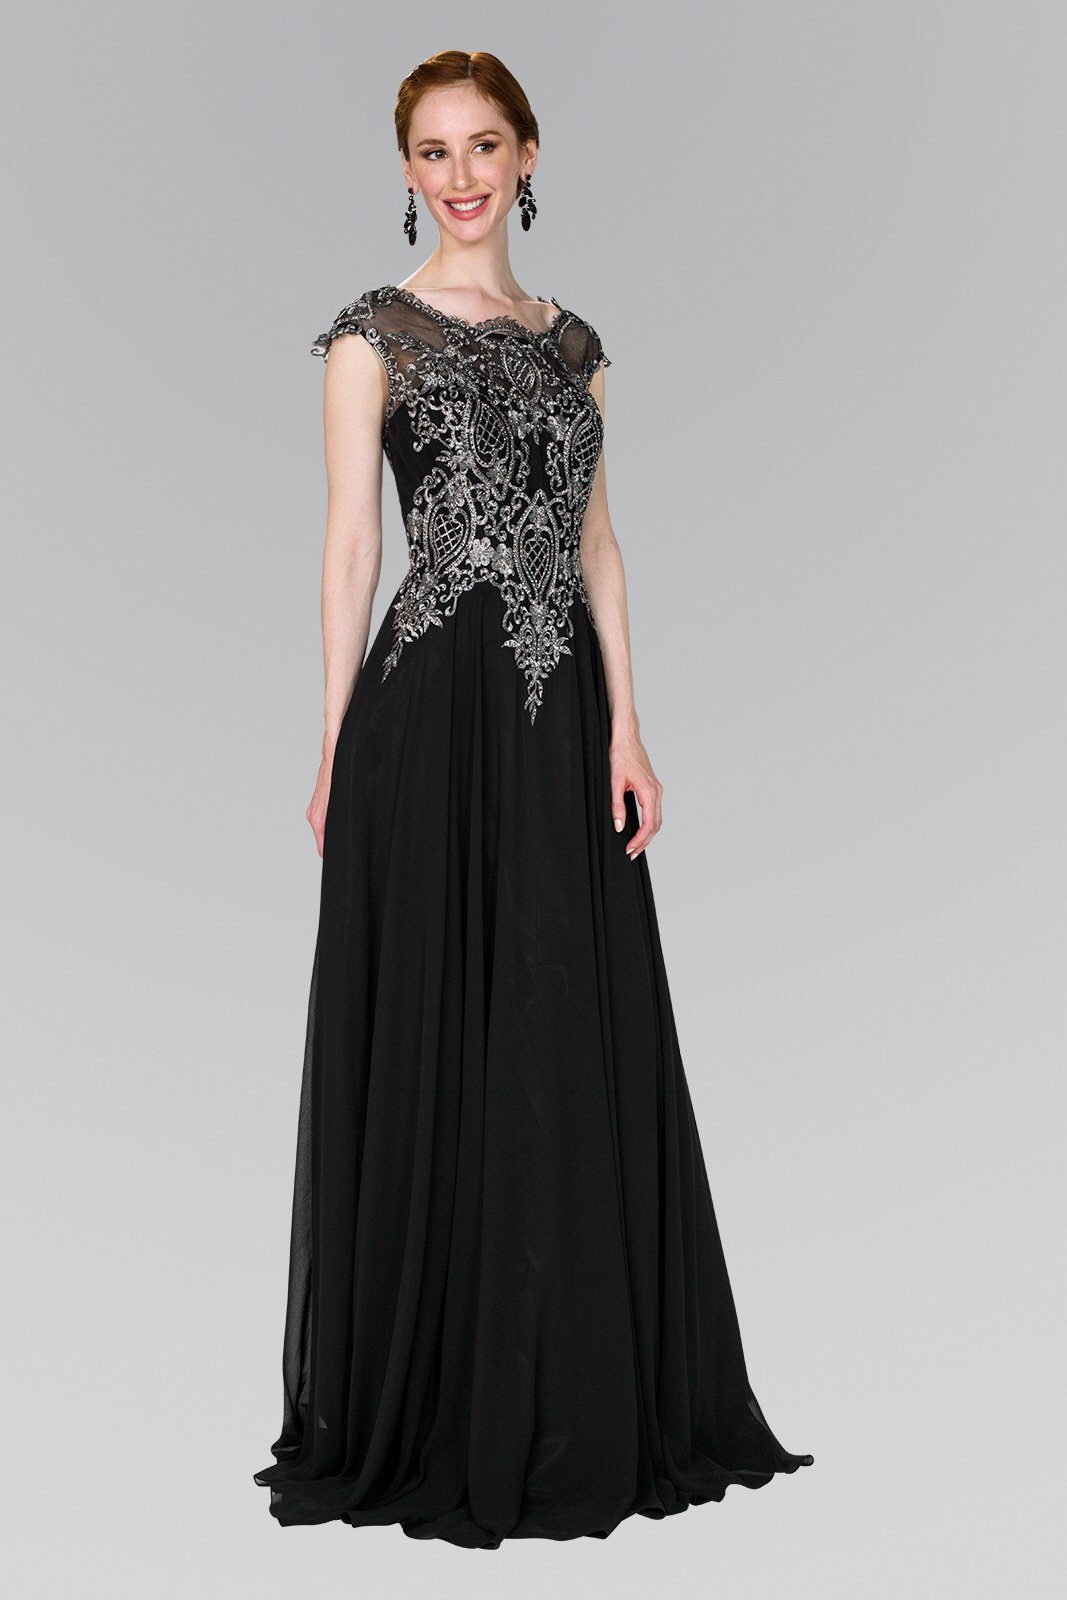 black formal gown plus size